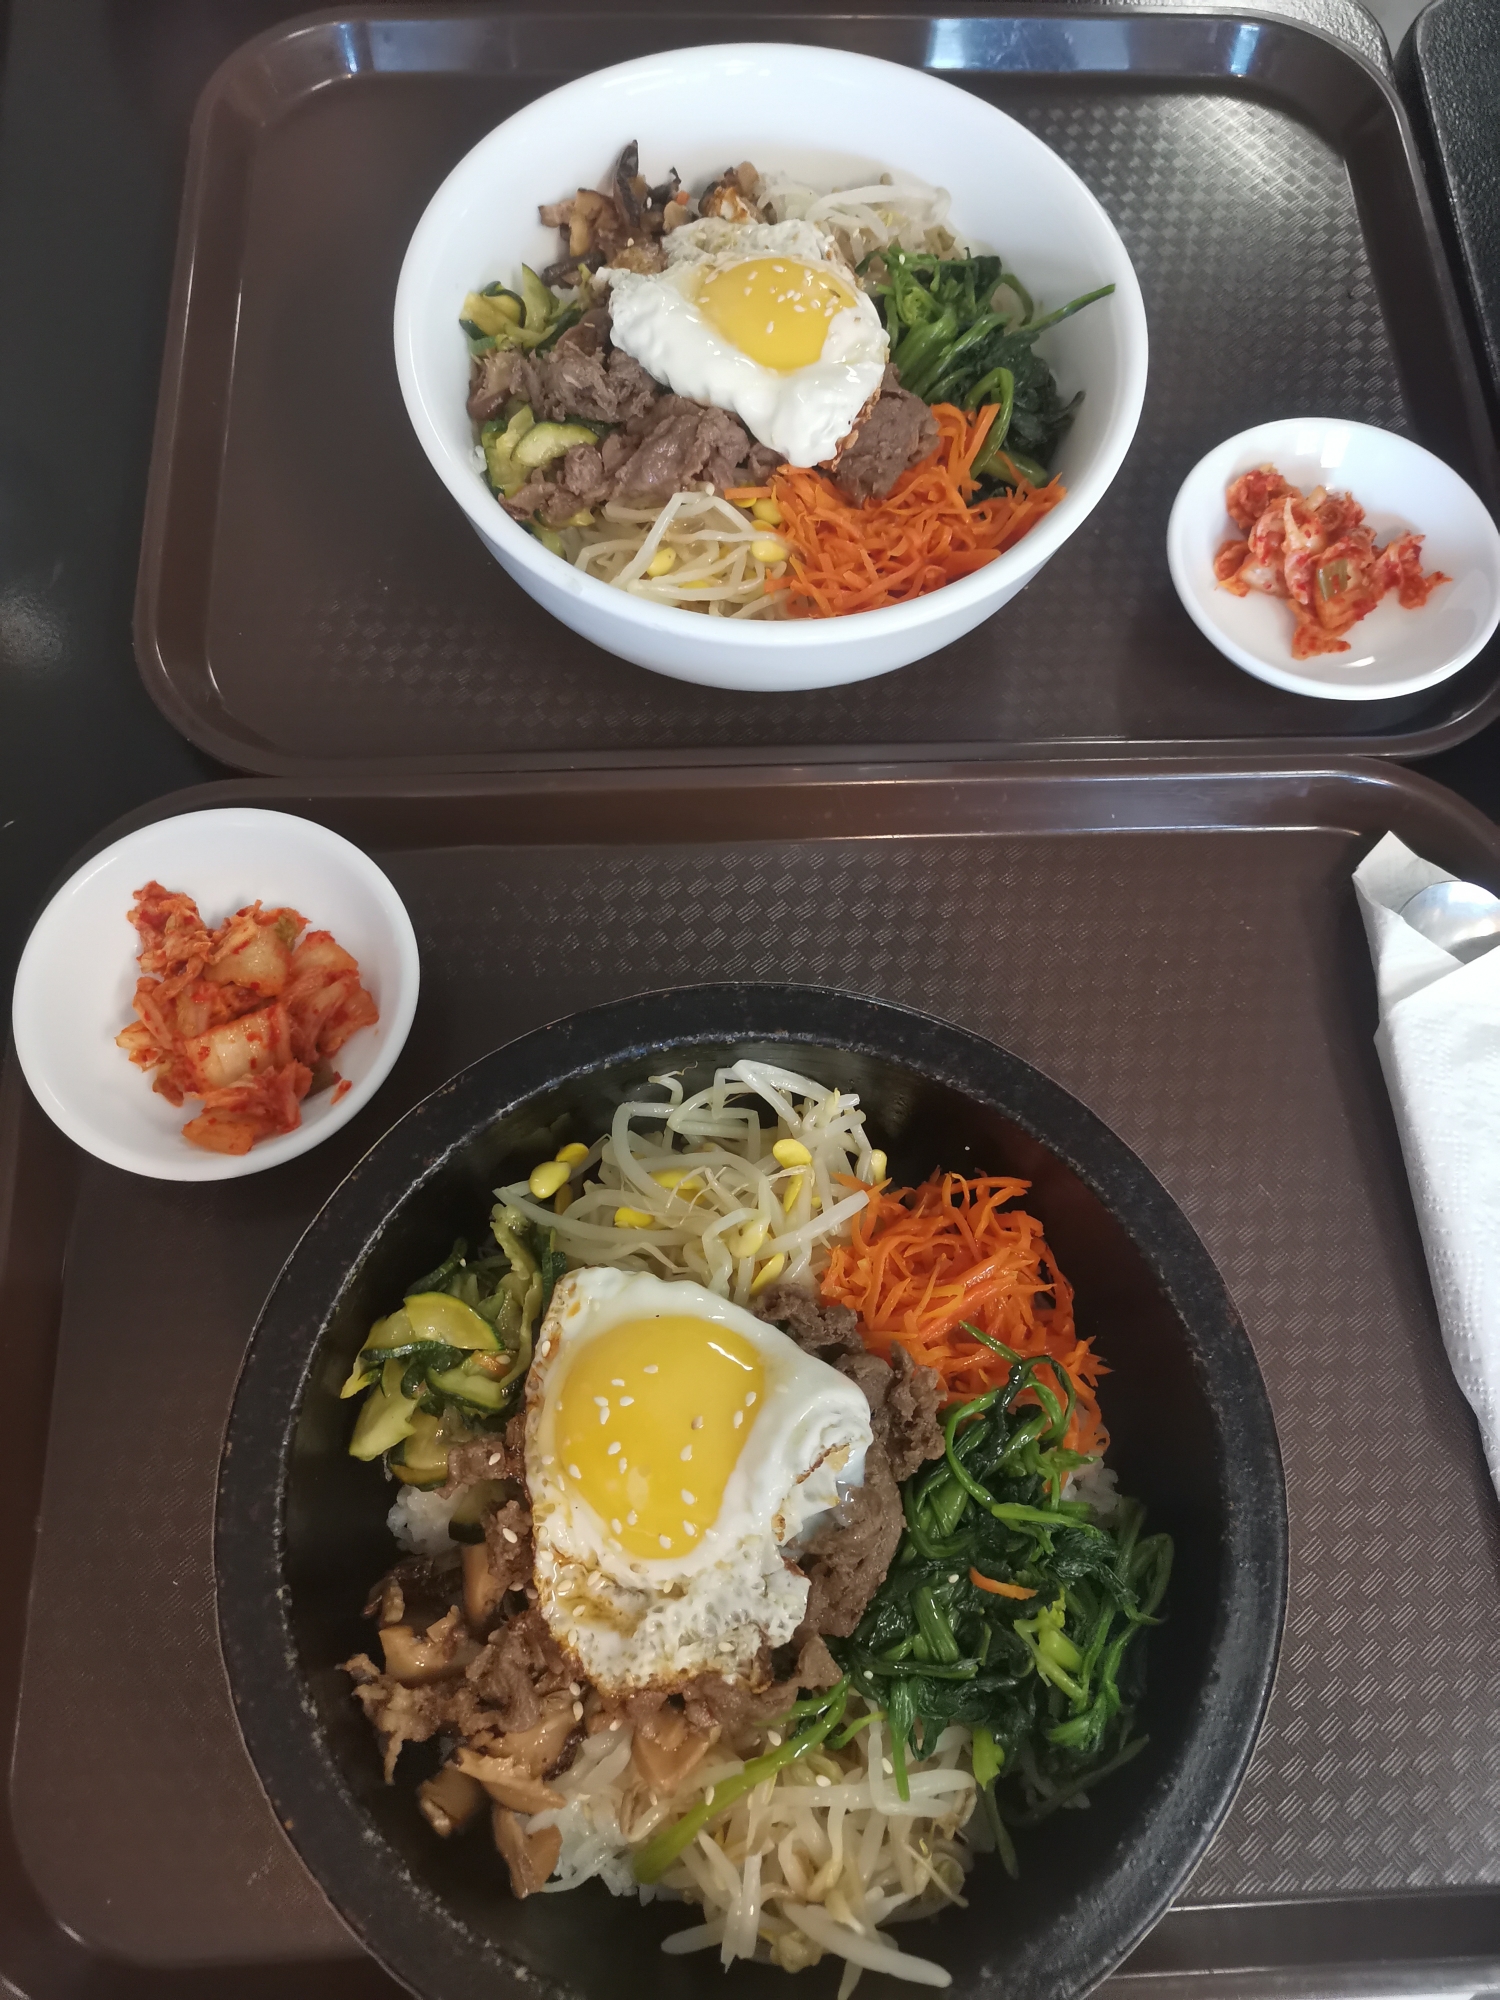 Korean dish called bibimbap